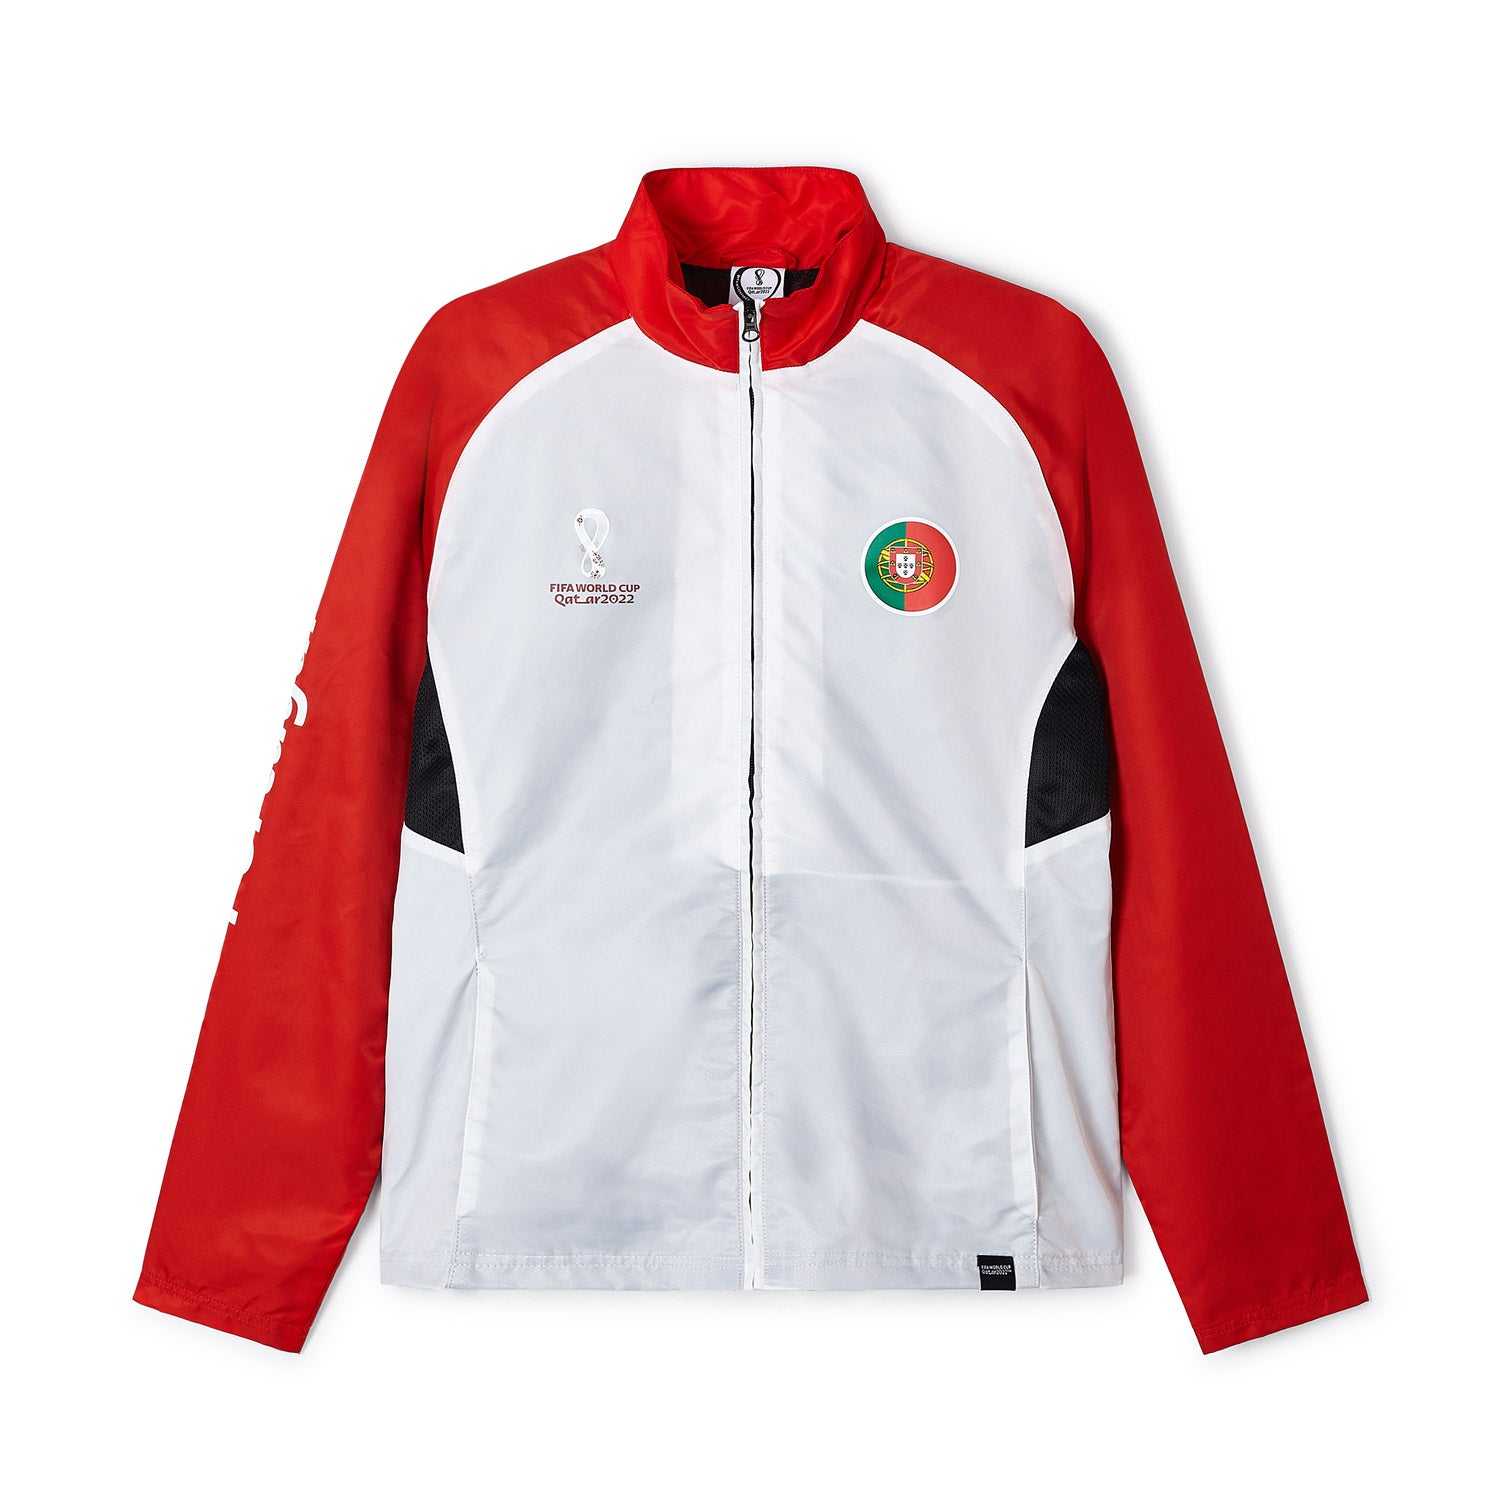 World Cup 2022 Portugal White Raglan Jacket - Men's